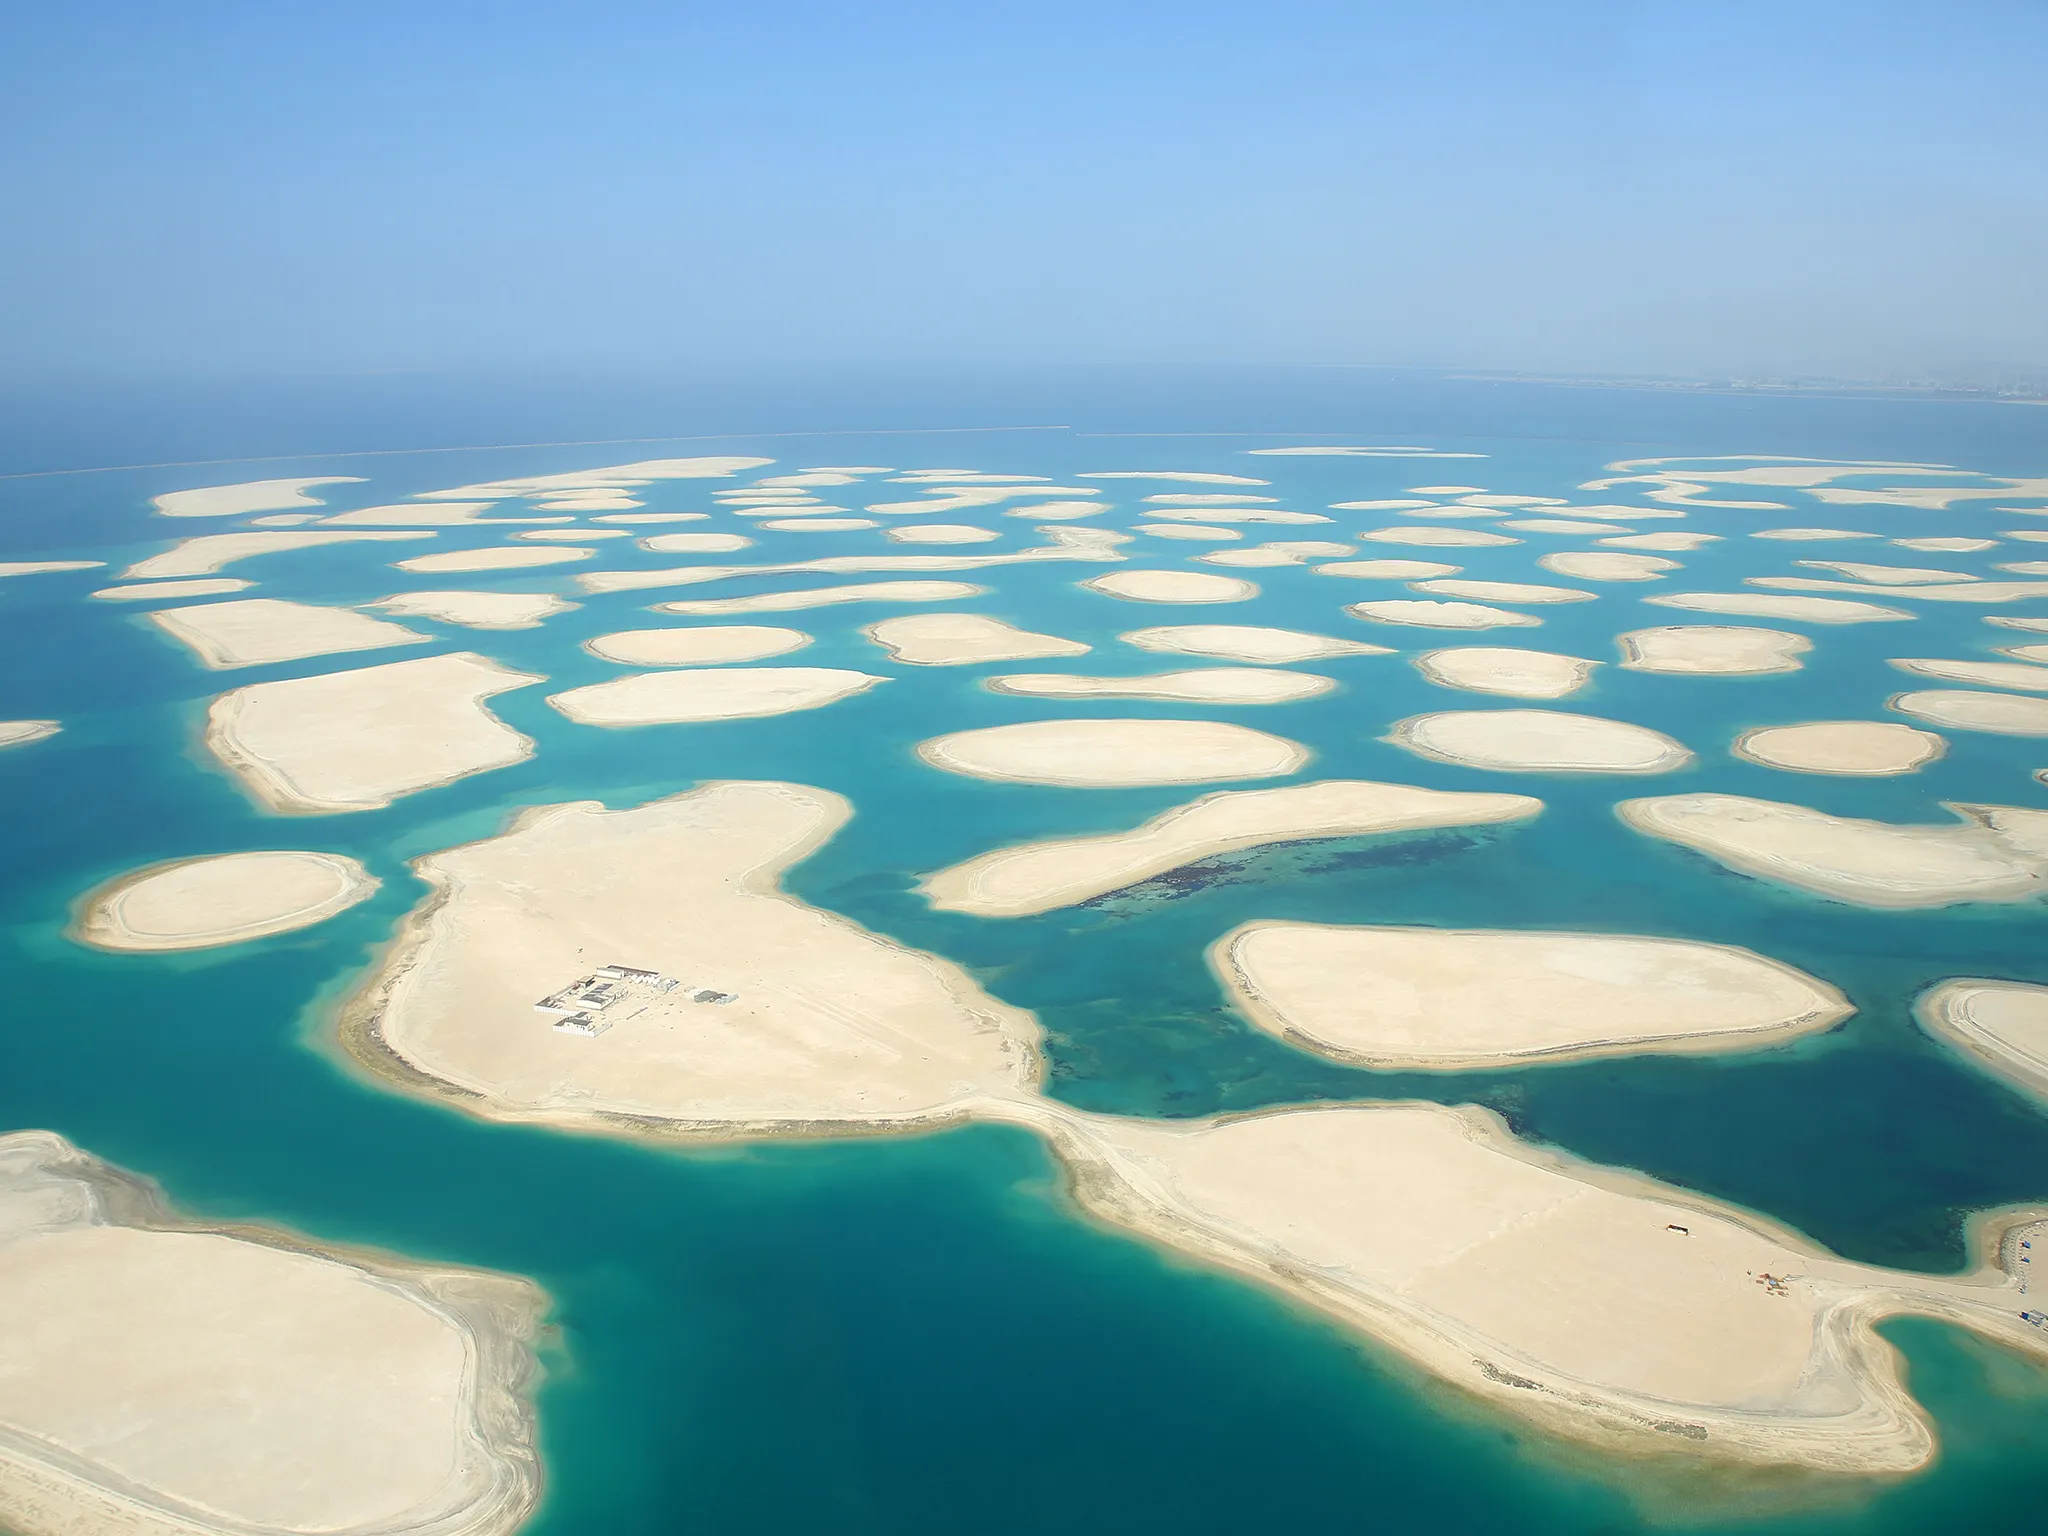 Aerial view of many sandbanks spread across a shallow coastline